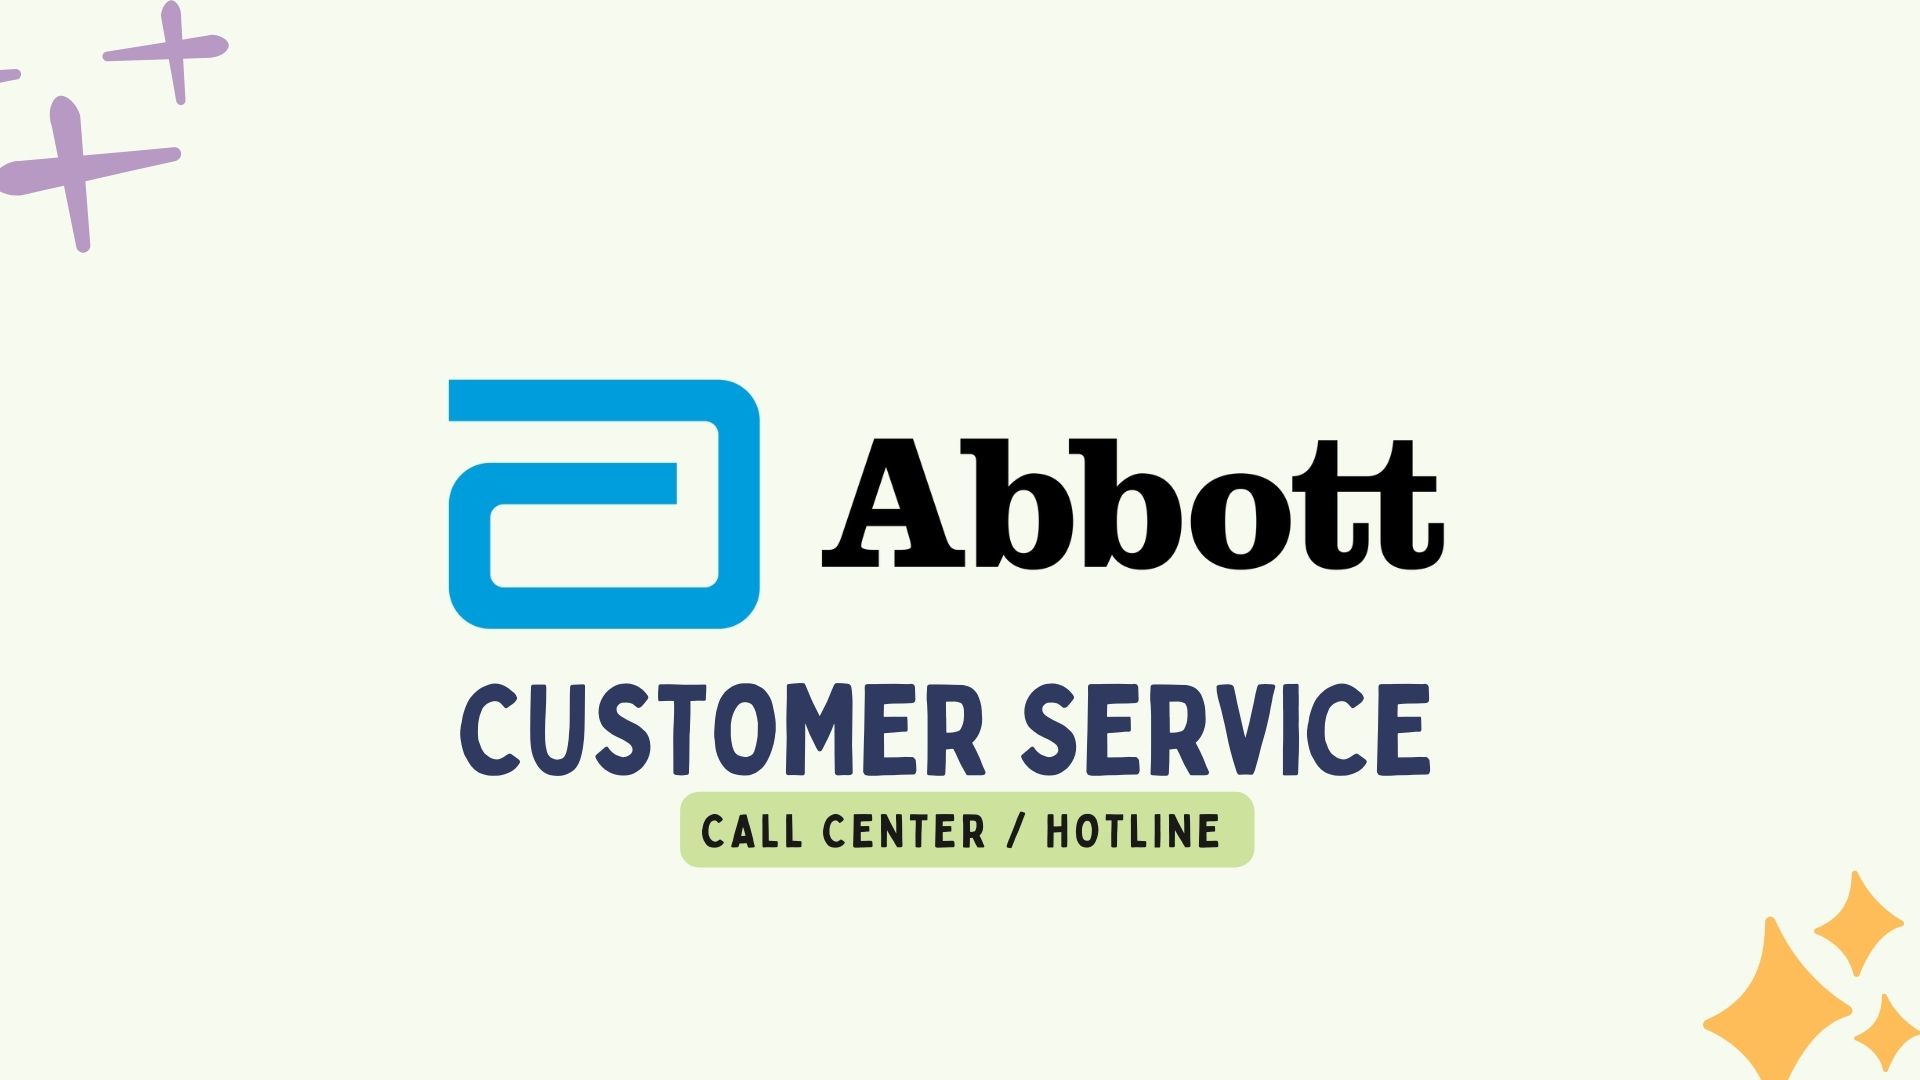 Abbott LifePlus Customer Service